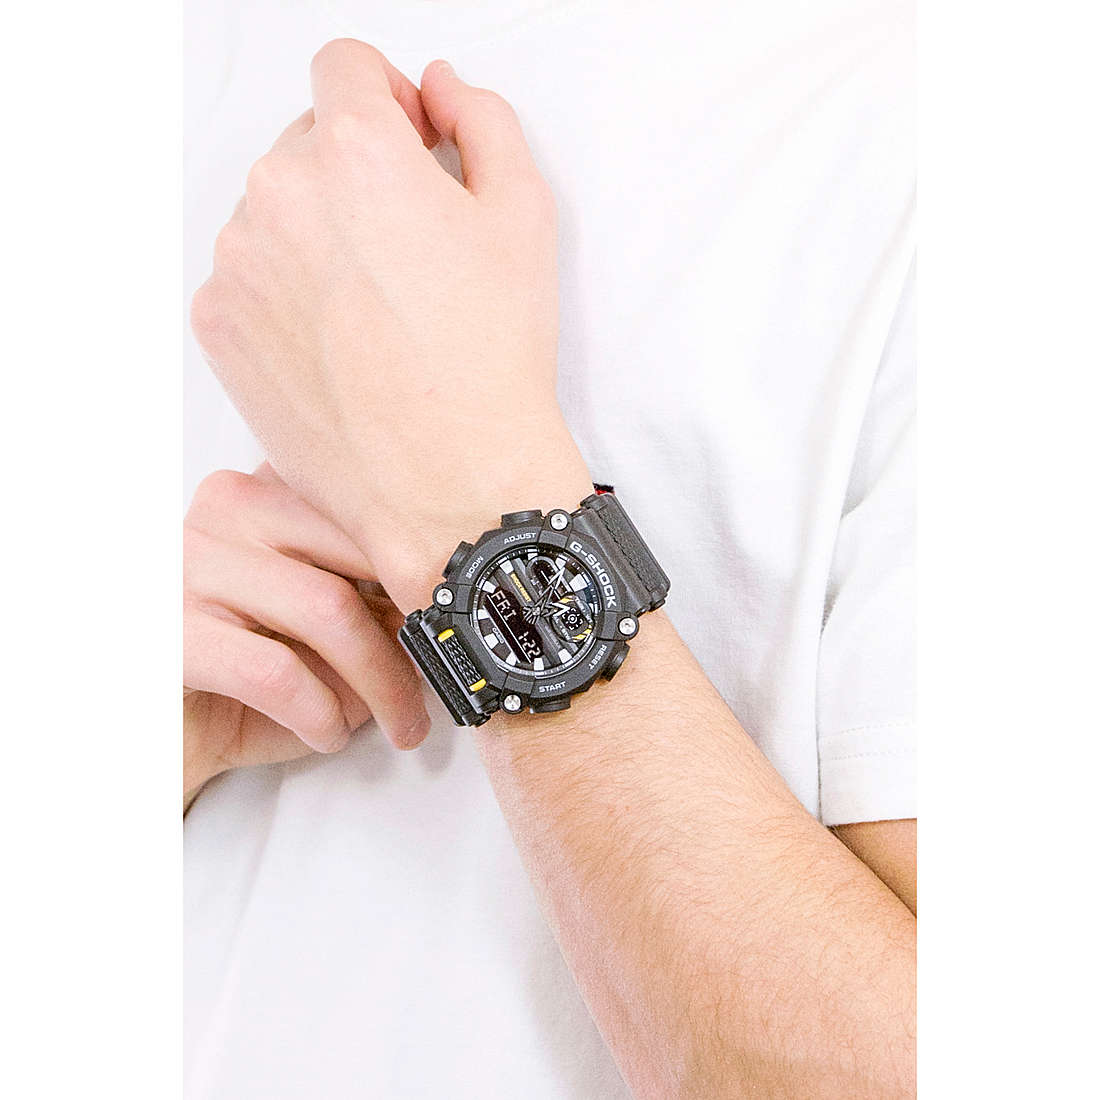 900 g shock ga Rugged Watches